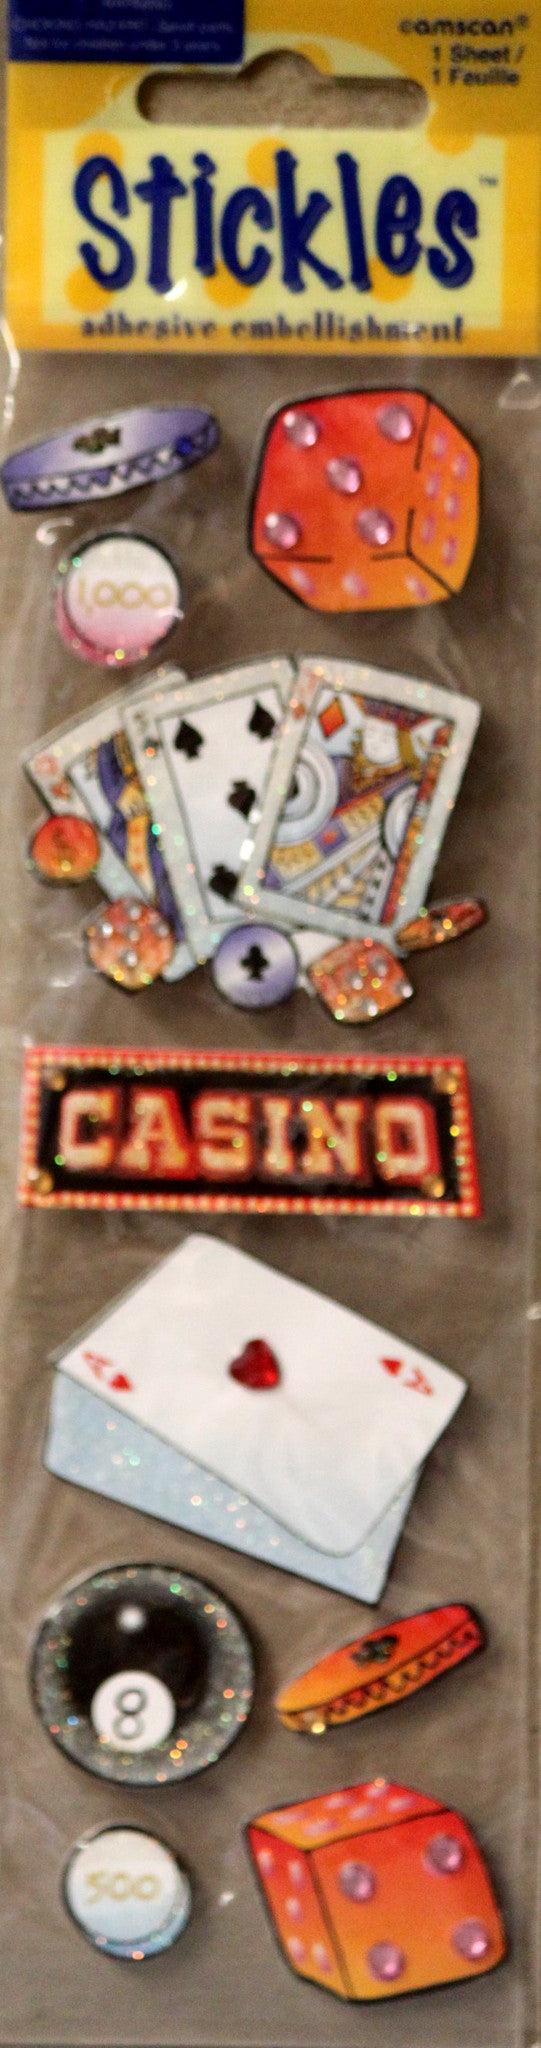 Stickles Casino Dimensional Glitter Stickers